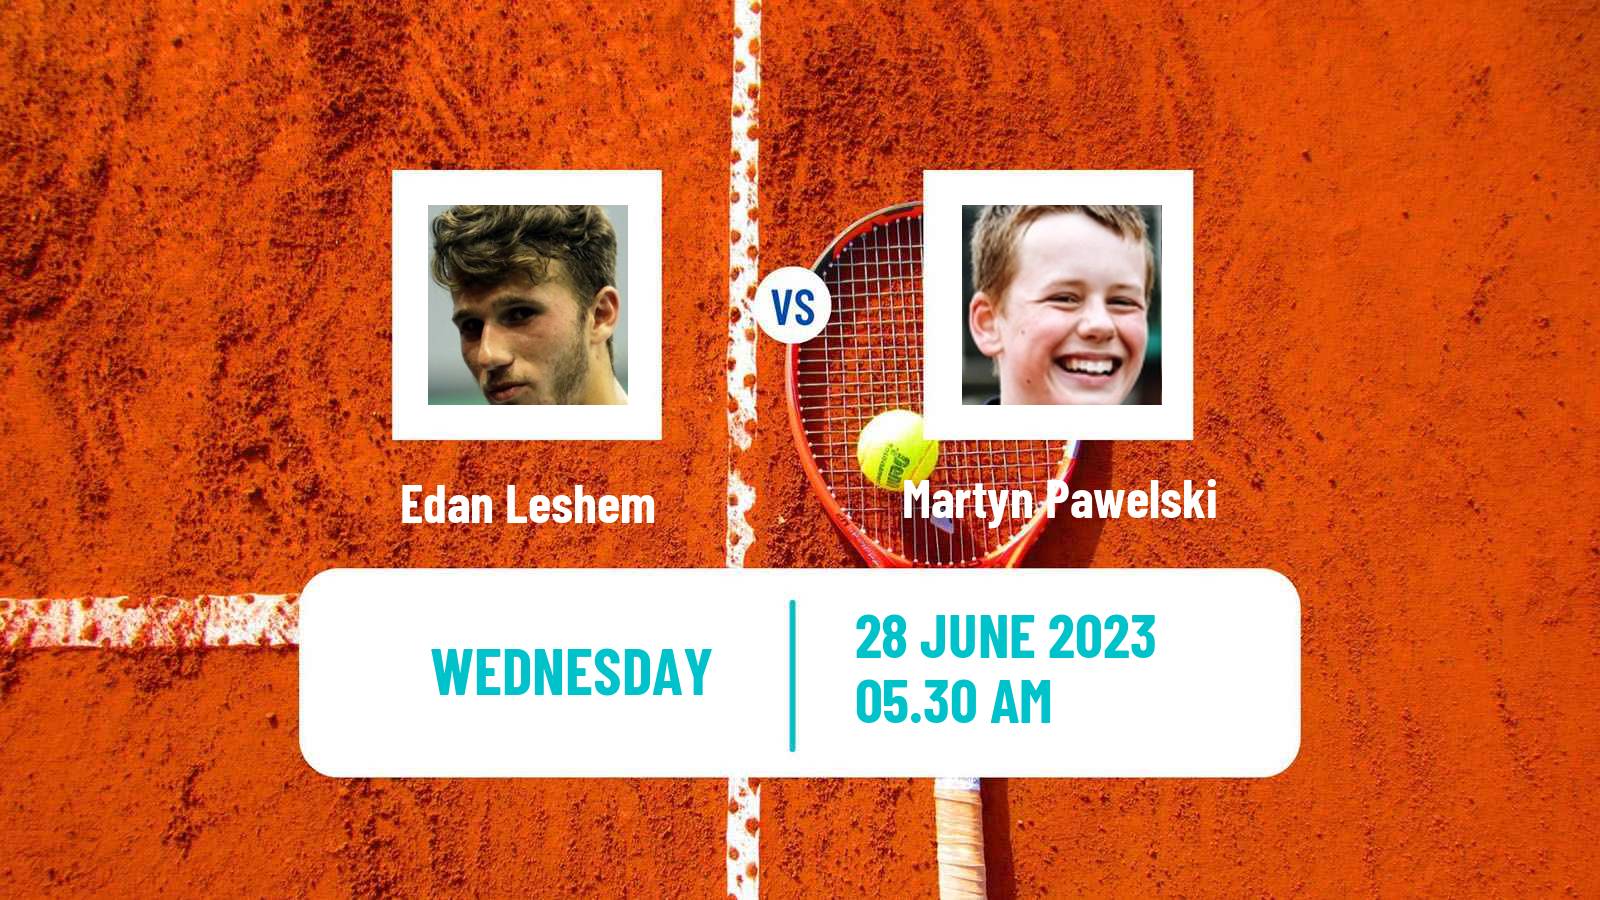 Tennis ITF M25 Netanya 2 Men Edan Leshem - Martyn Pawelski